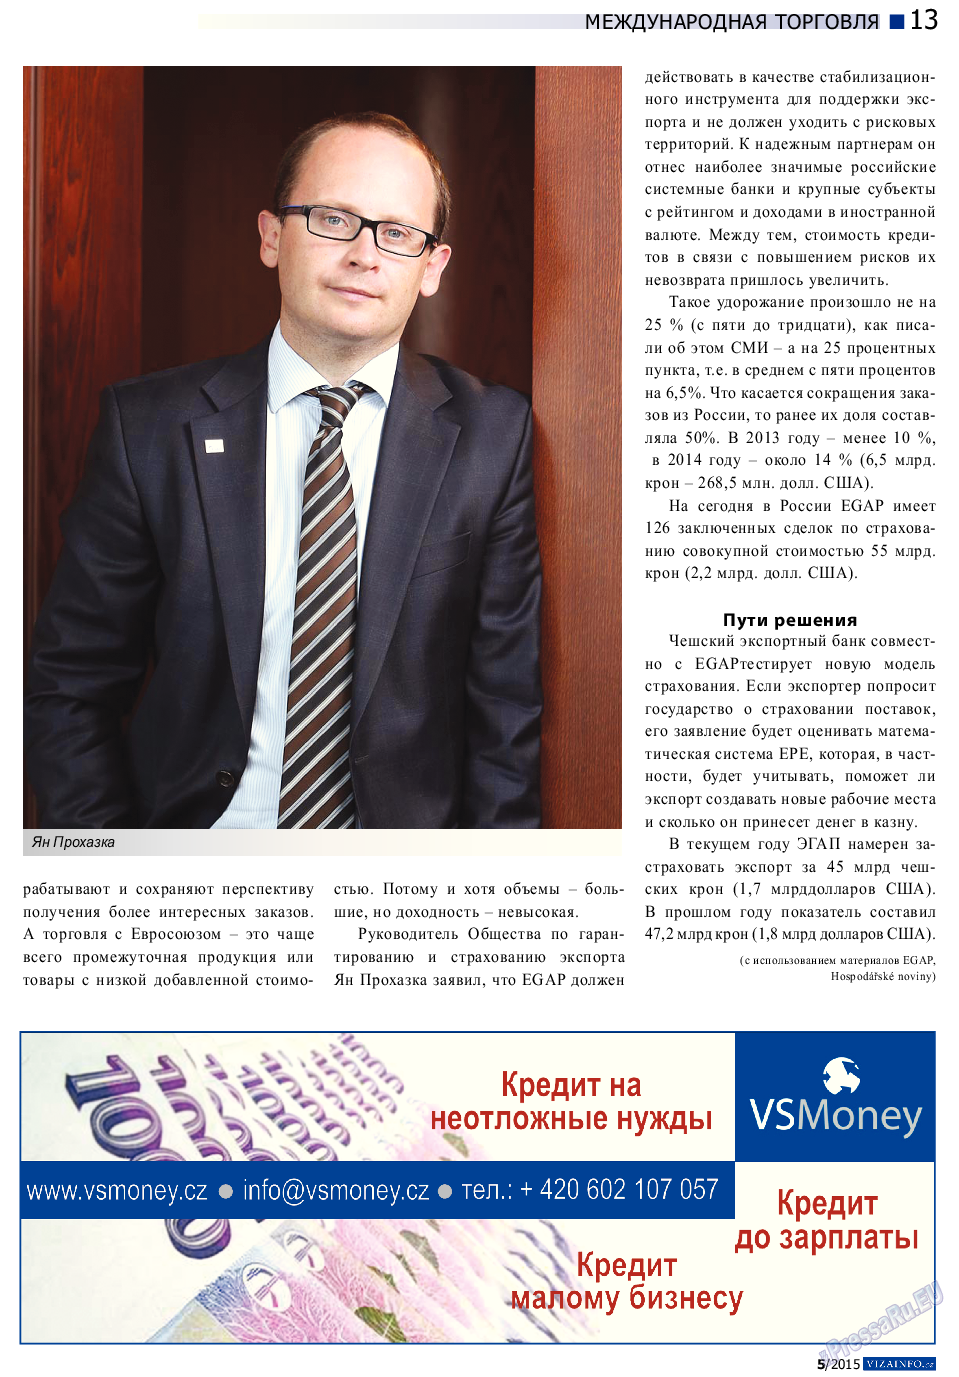 Vizainfo.cz (газета). 2015 год, номер 69, стр. 13